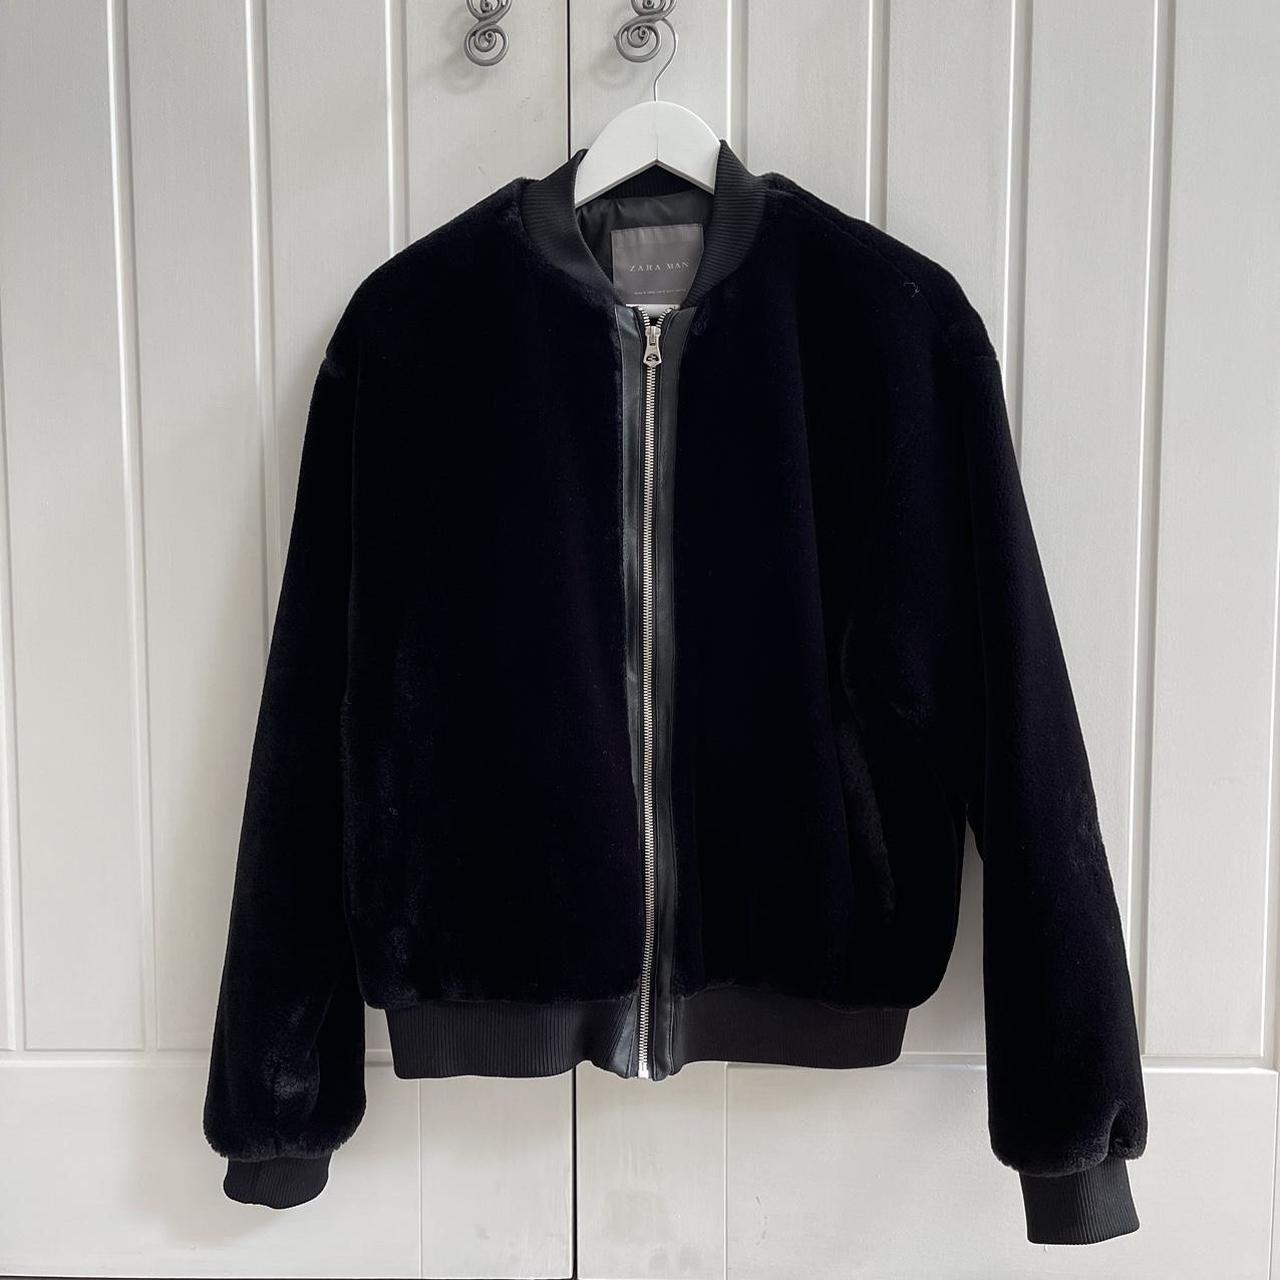 Zara Man Velour Fur Black Bomber Jacket Size medium... - Depop